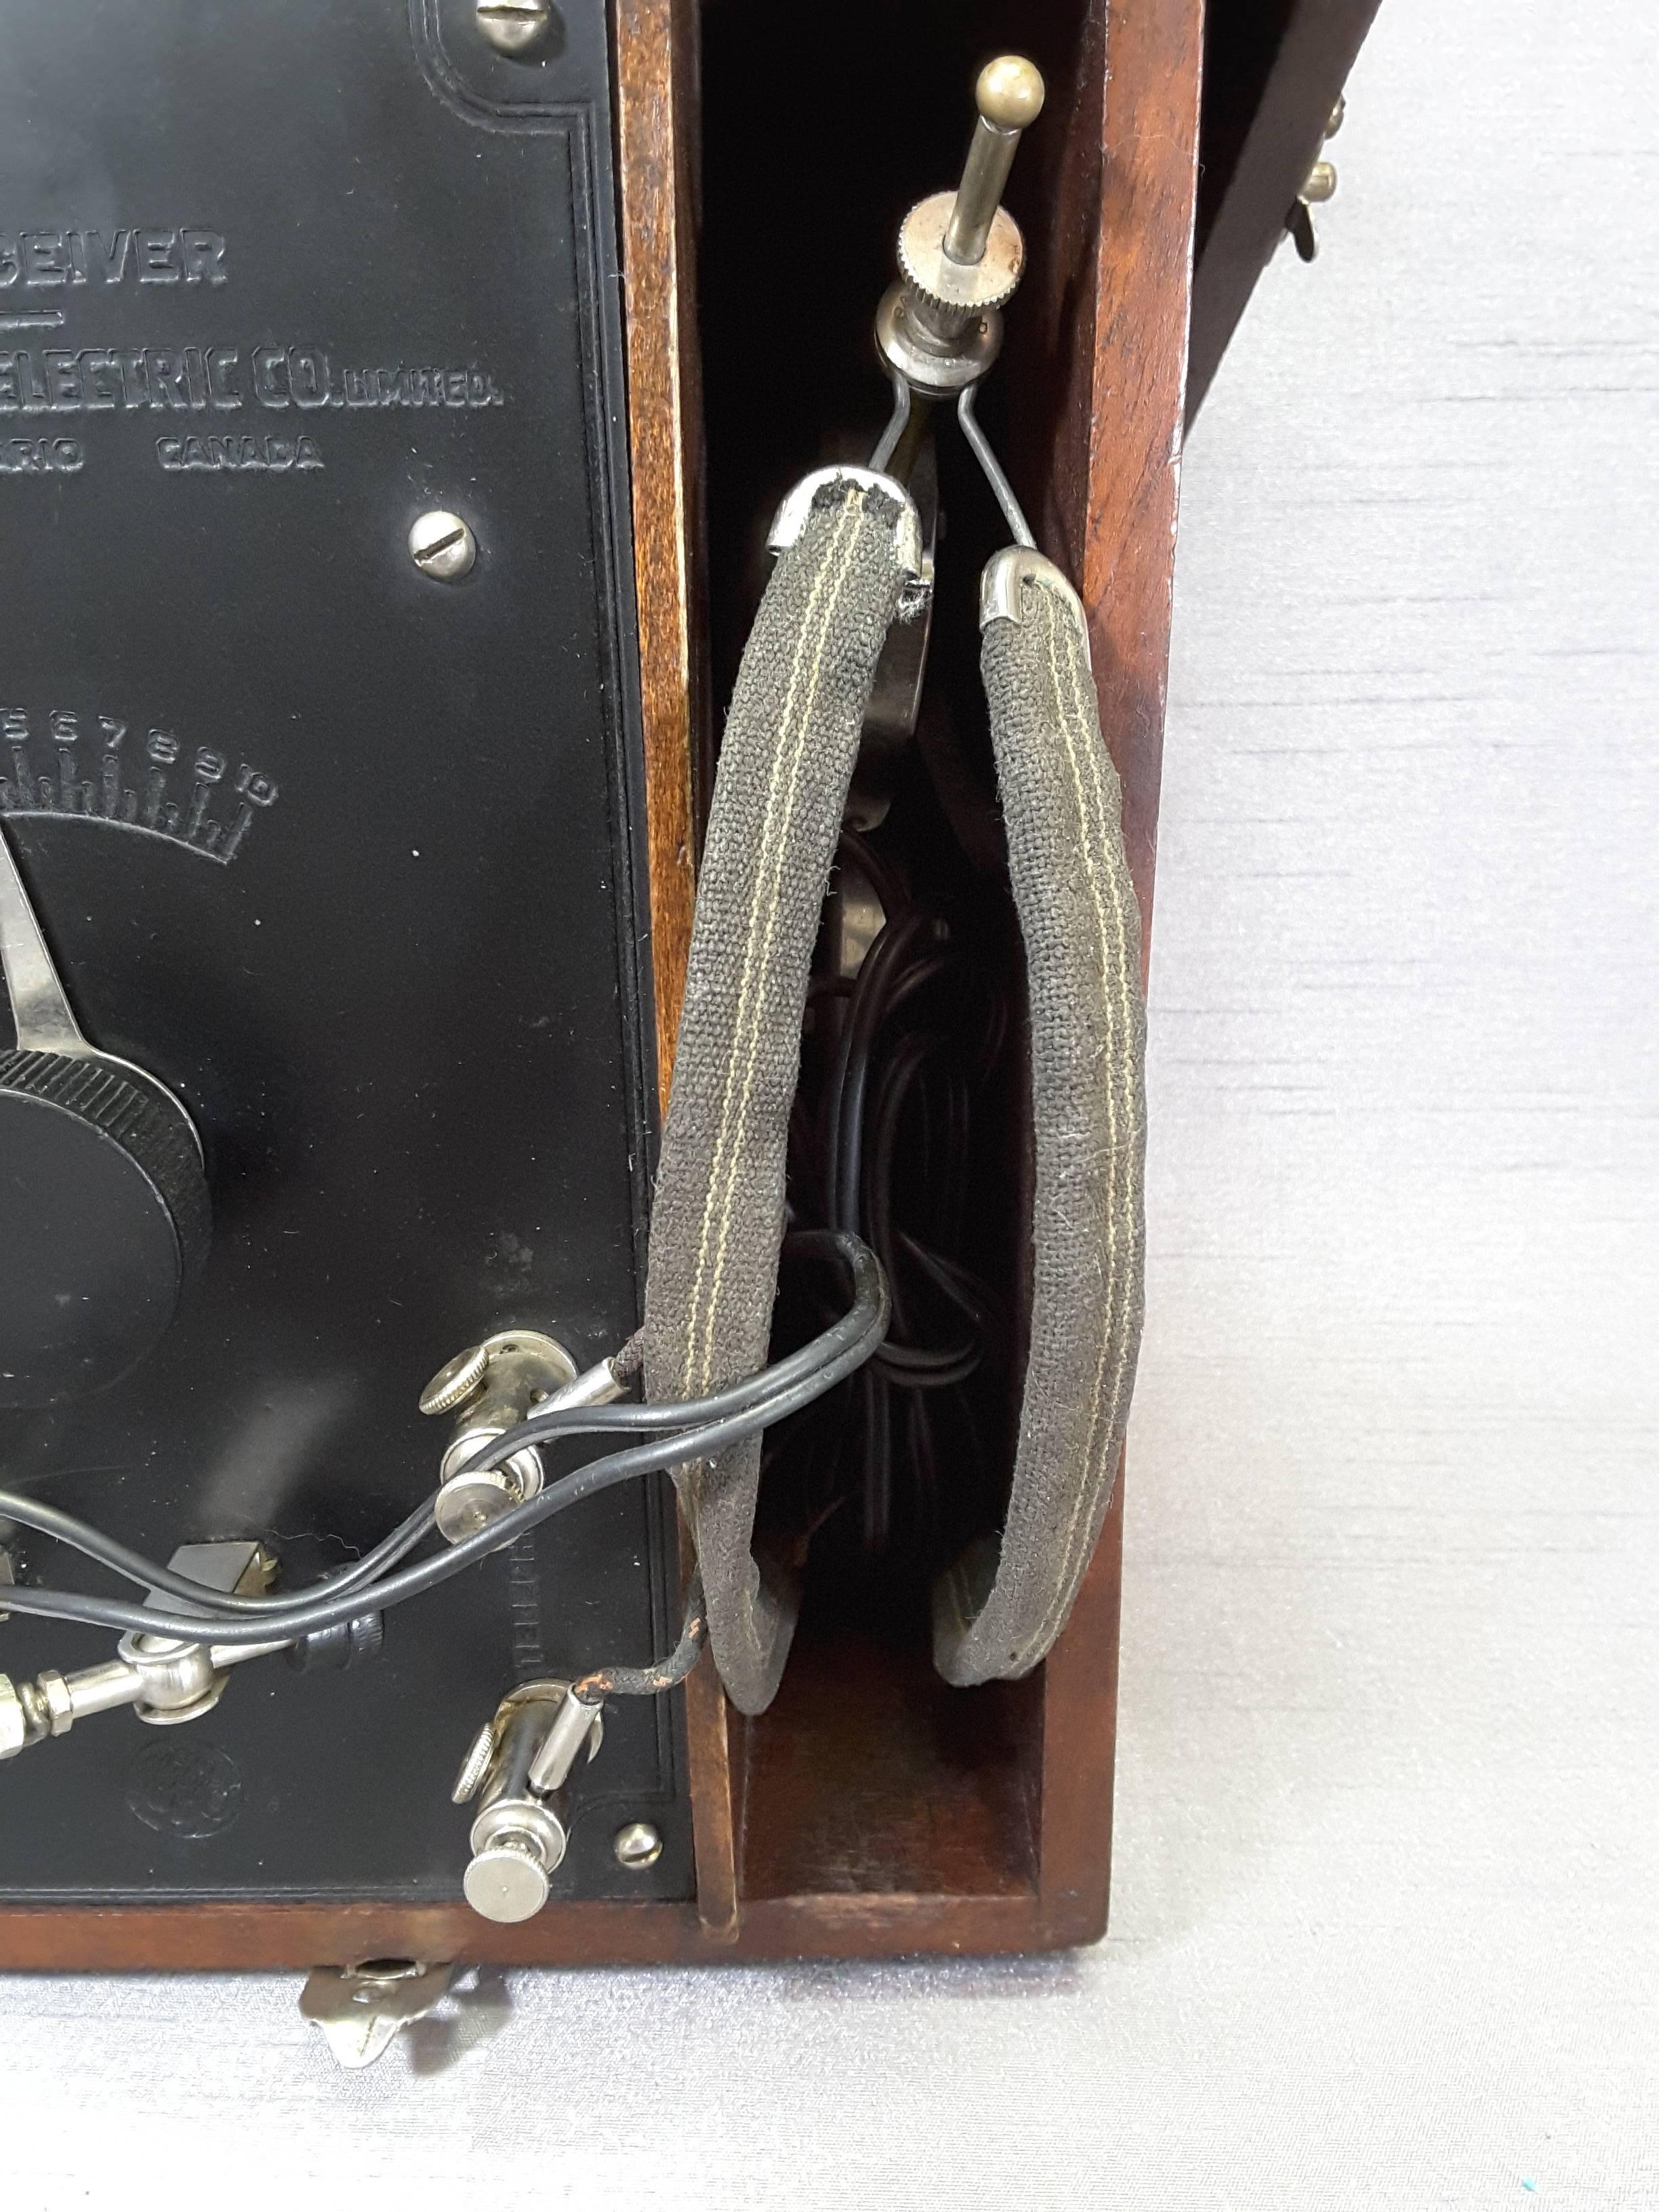 Canadian Crystal Radio Receiver by CGE. Co. Ltd., Circa 1929-1935